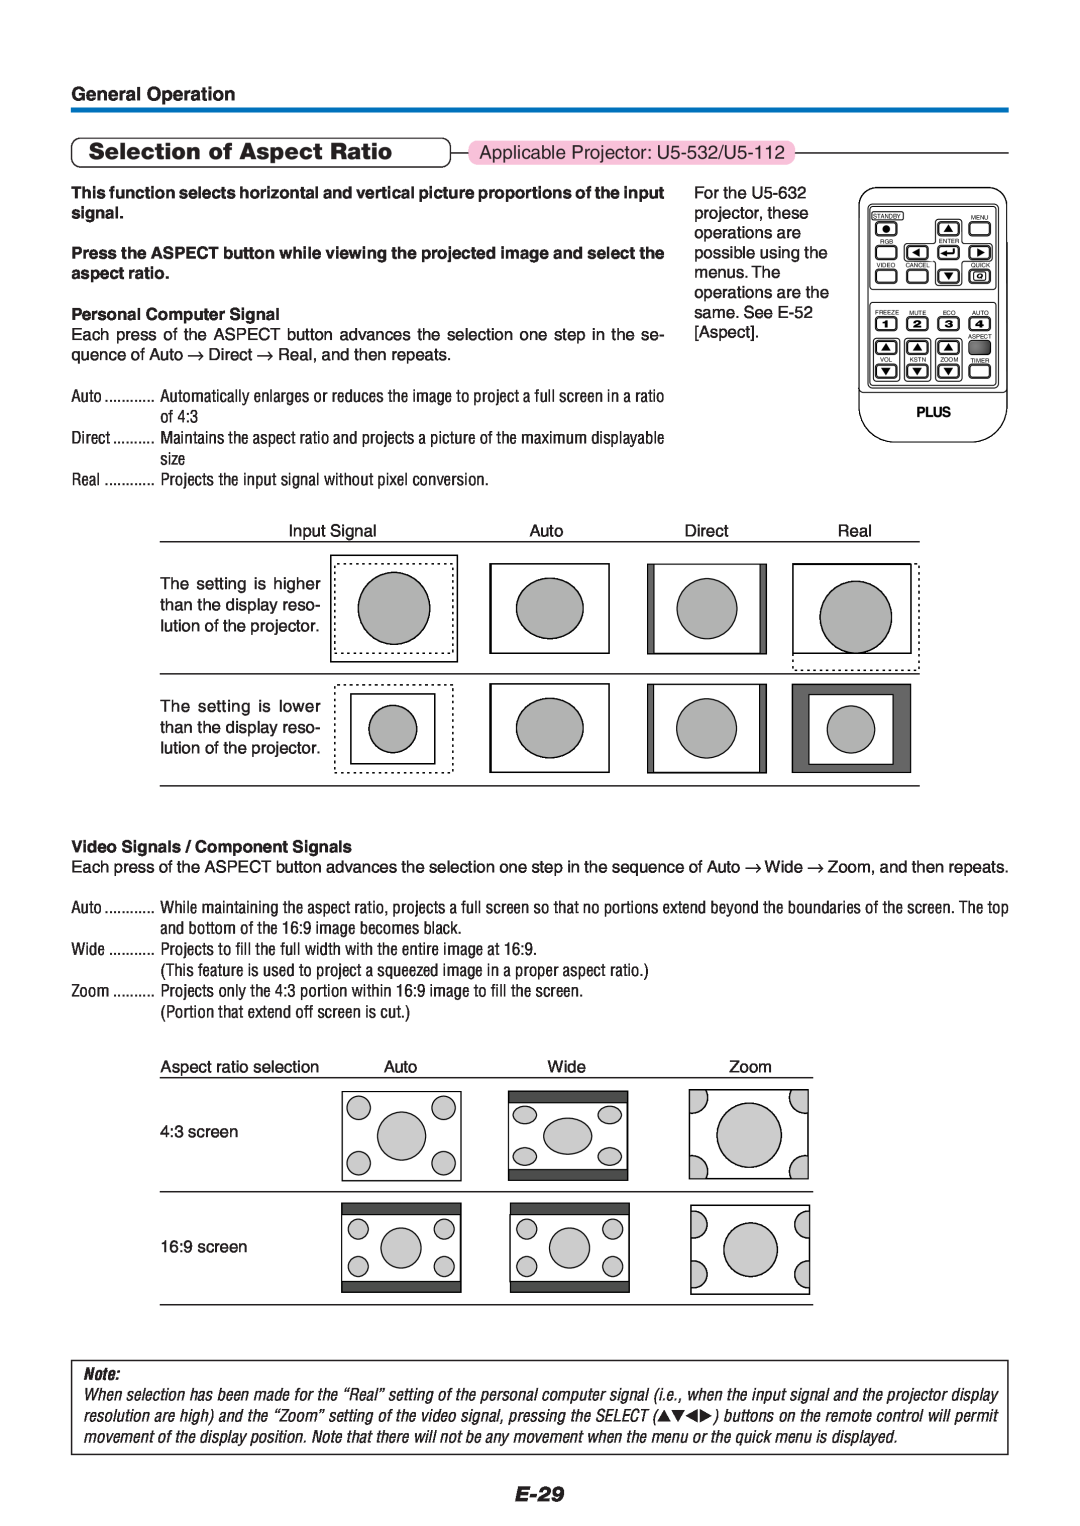 PLUS Vision U5-632, U5-532, U5-512 user manual Selection of Aspect Ratio, E-29, General Operation, Personal Computer Signal 